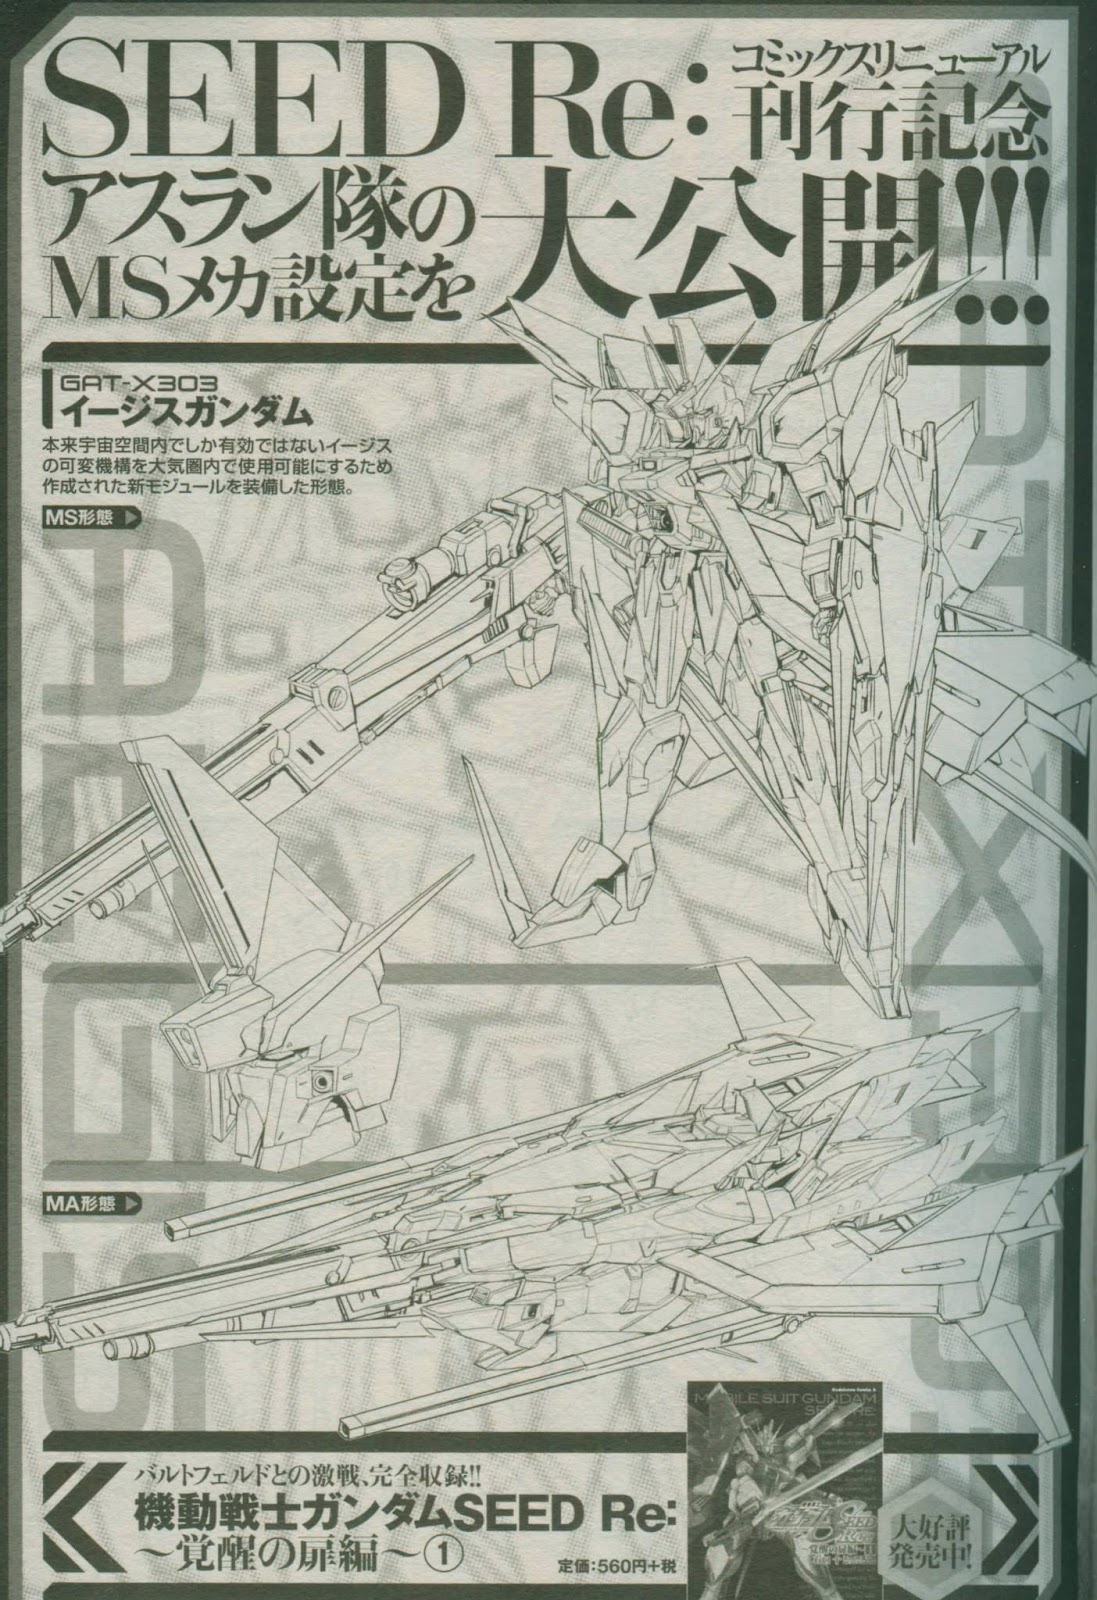 Gundam SEED Re: MS Mechanic Files - Gundam Kits Collection News and Reviews